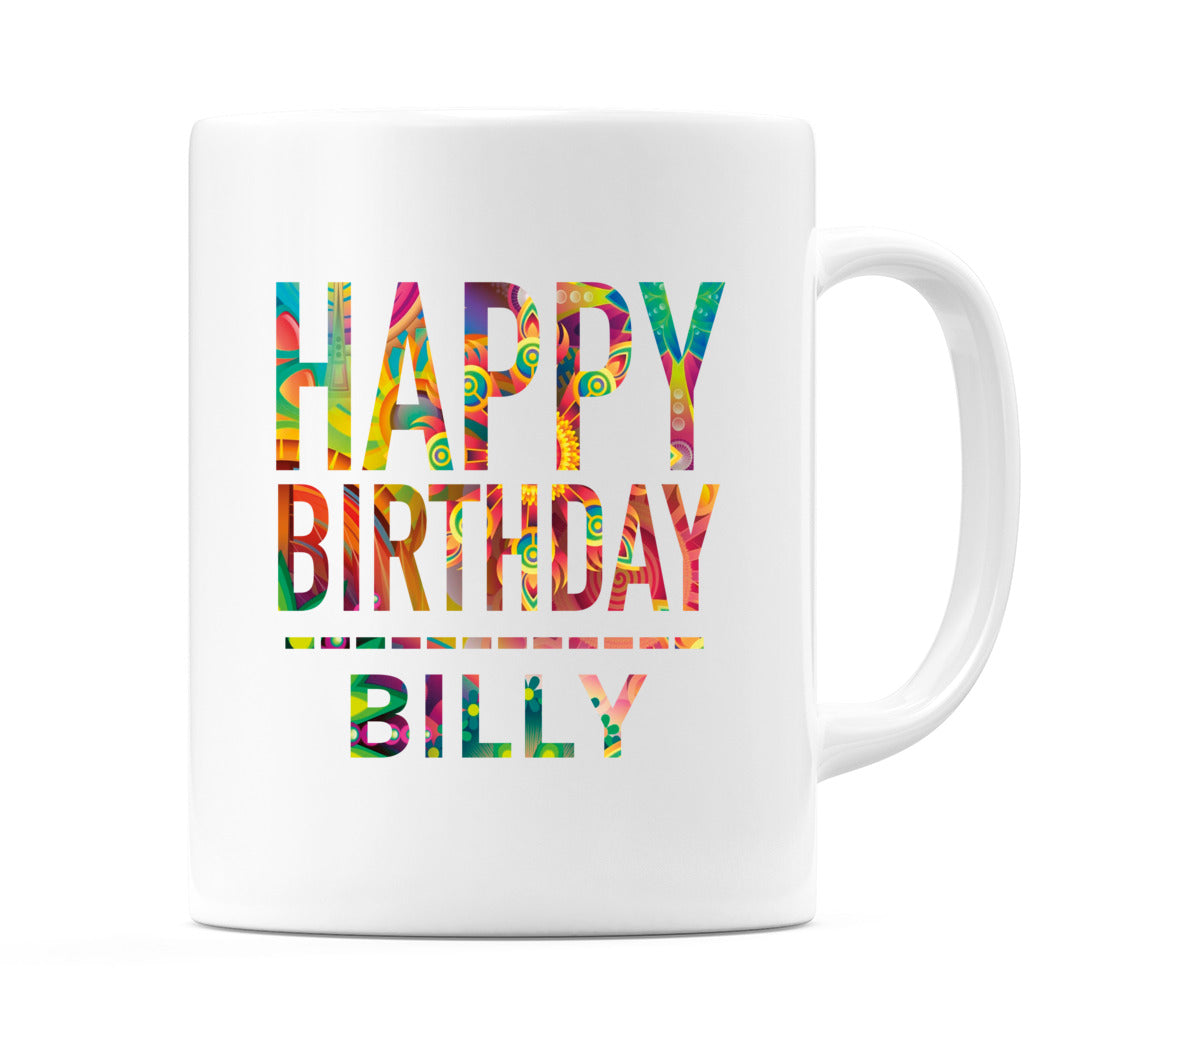 Happy Birthday Billy (Tie Dye Effect) Mug Cup by WeDoMugs